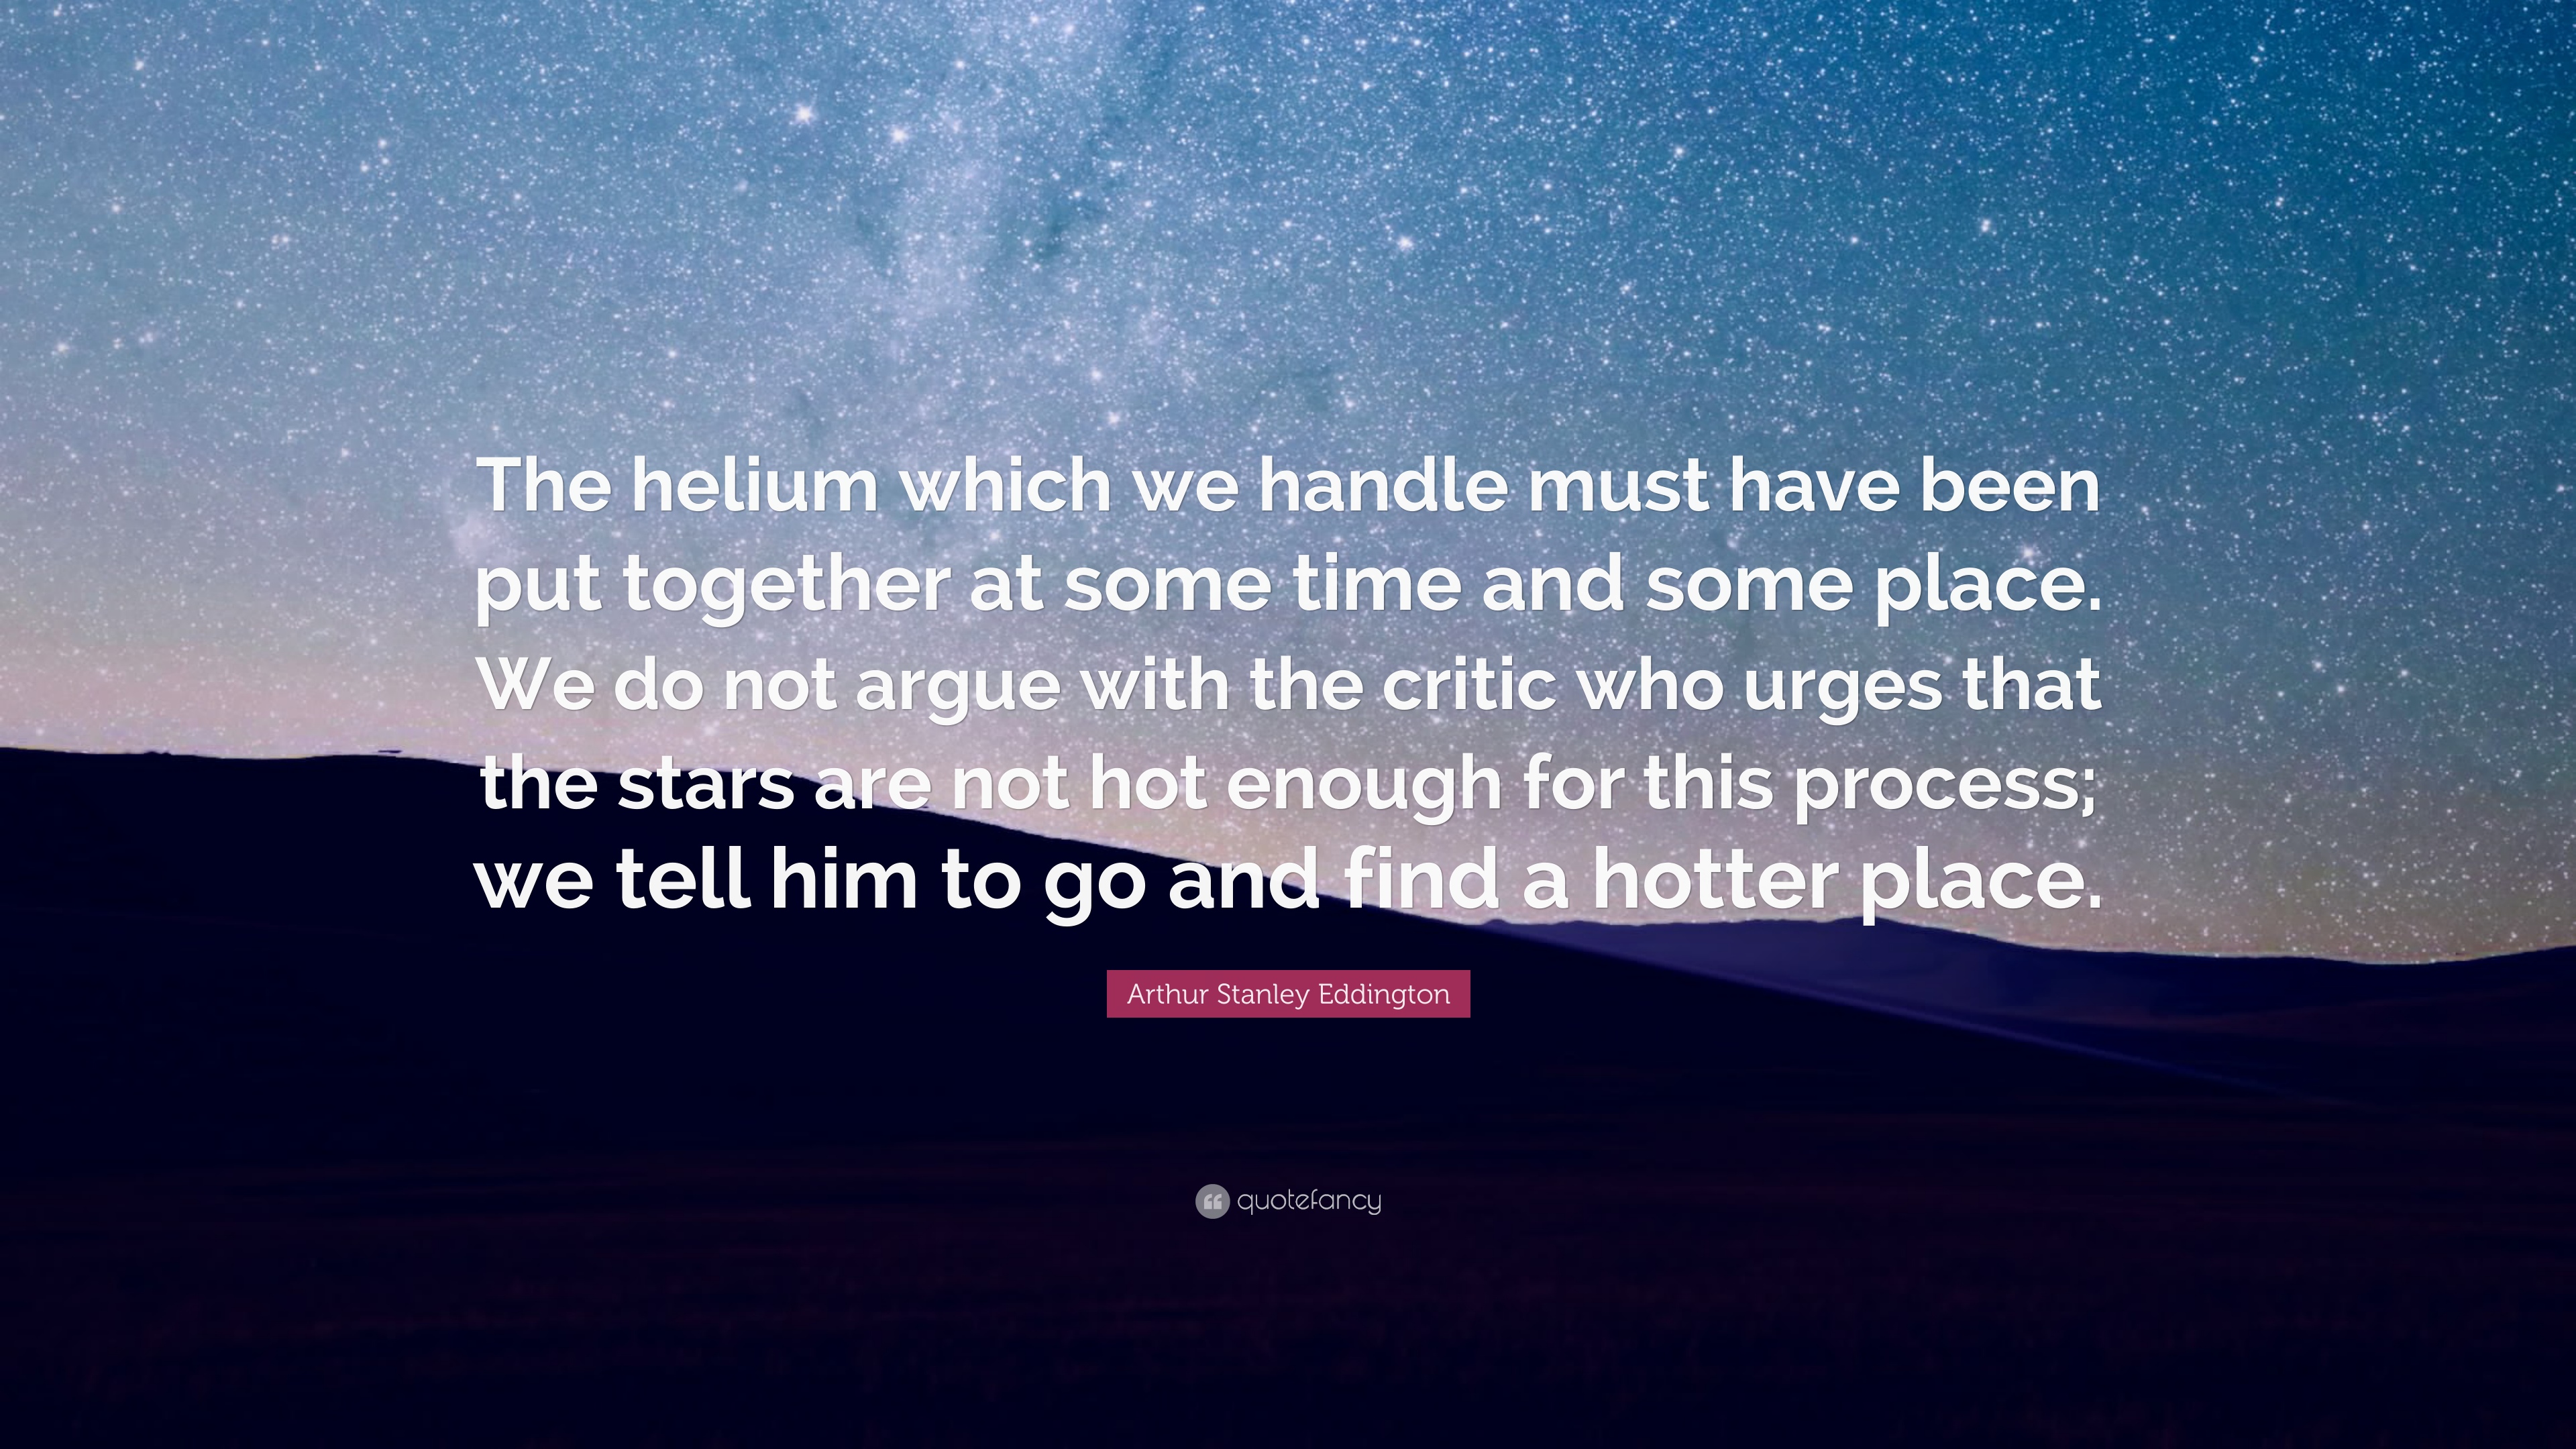 Arthur Stanley Eddington Quote: “The helium which we handle must